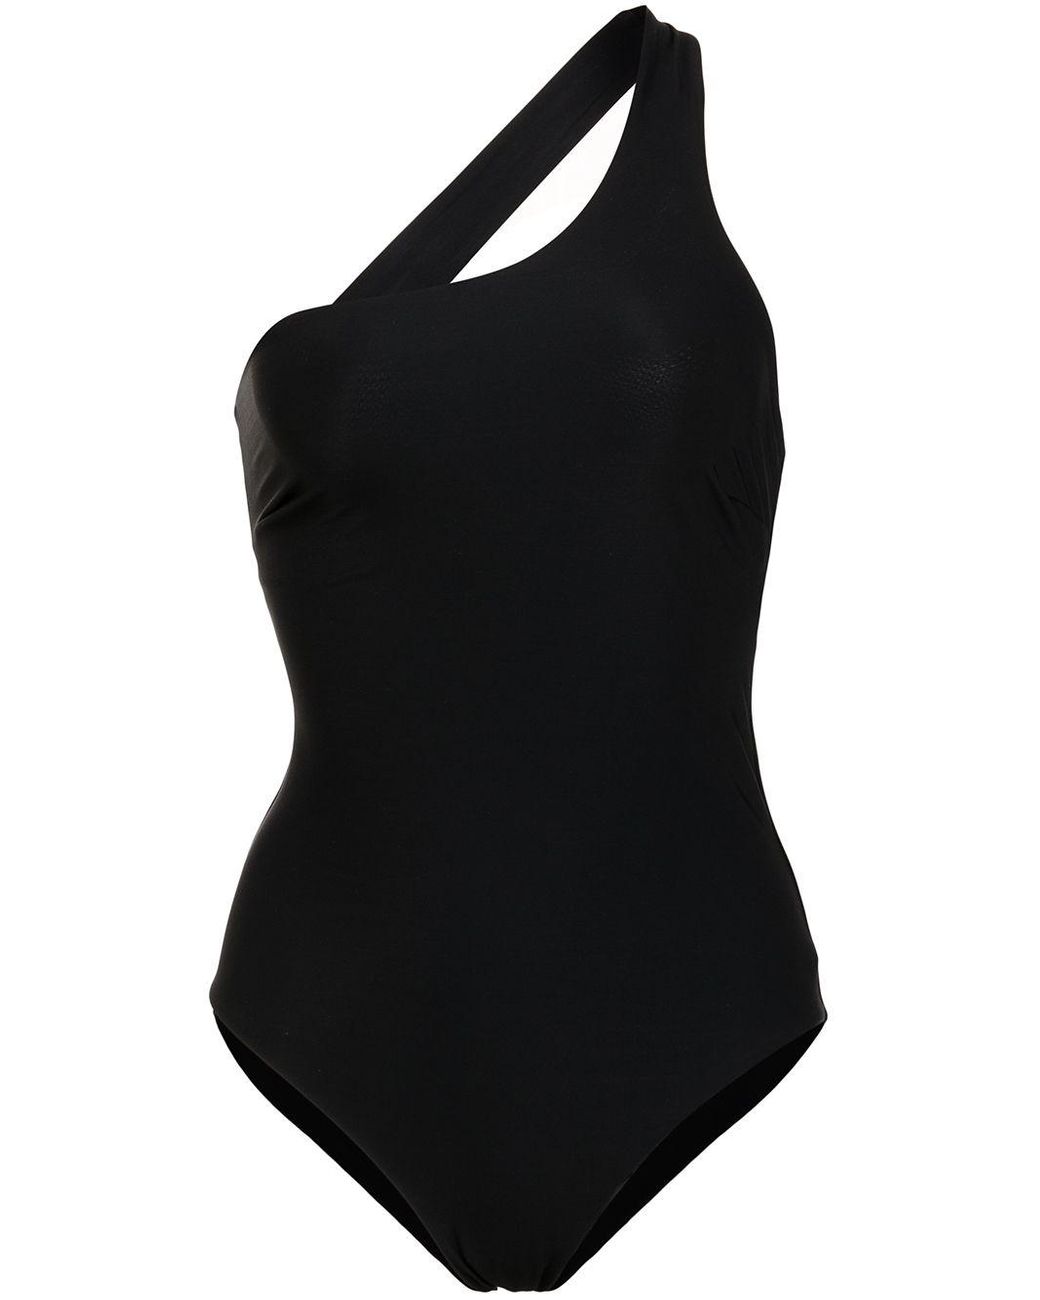 Bondi Born Colette One-shoulder Swimsuit in Black - Lyst